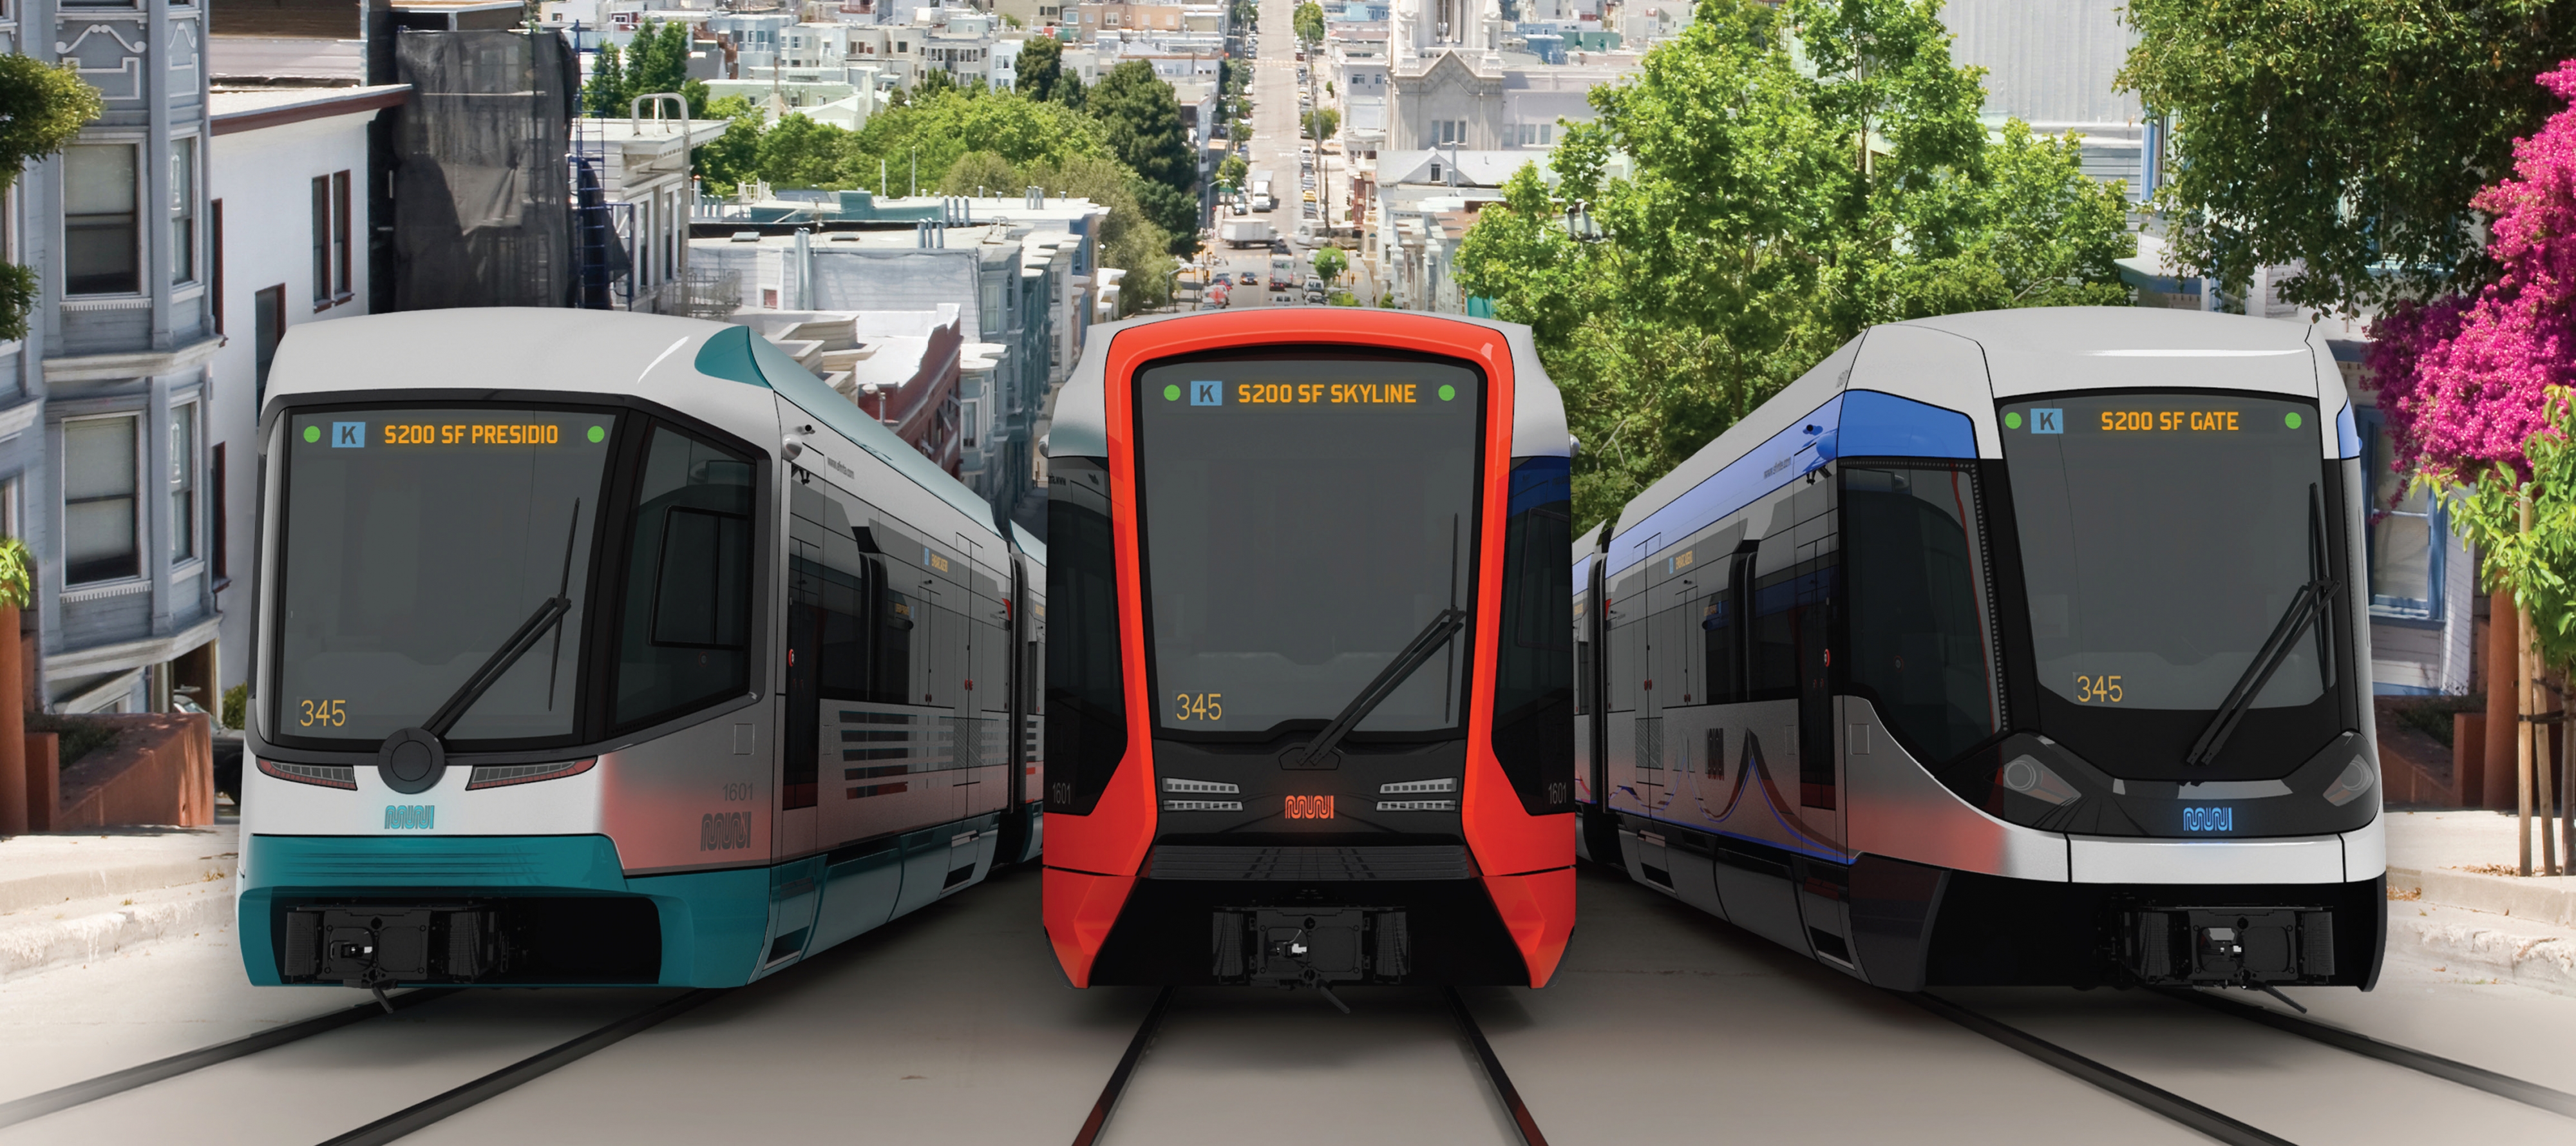 Renderings of three potential future Muni train designs